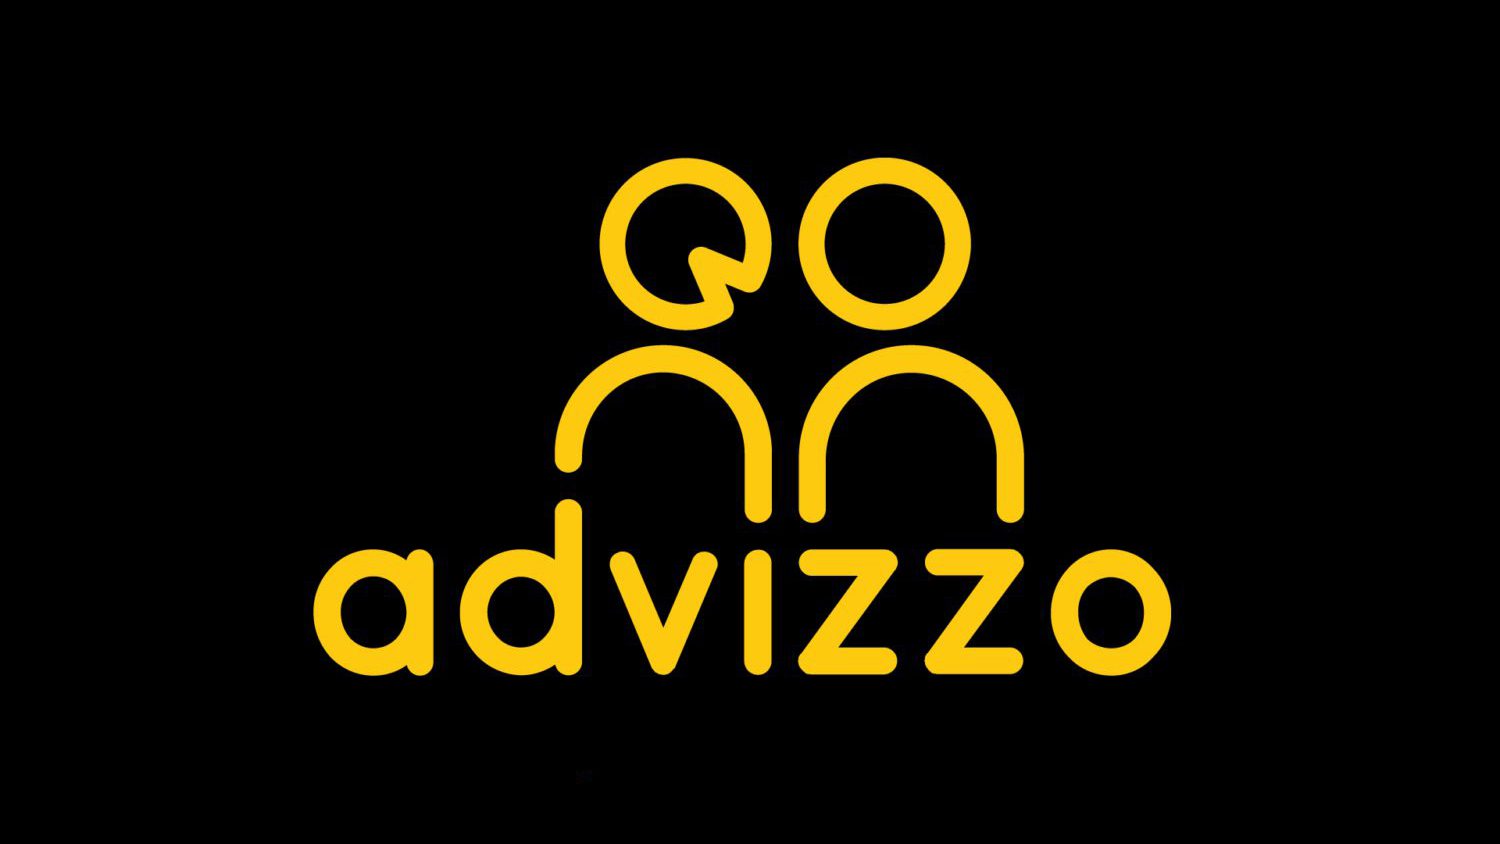 powercloud forms strategic alliance with Advizzo